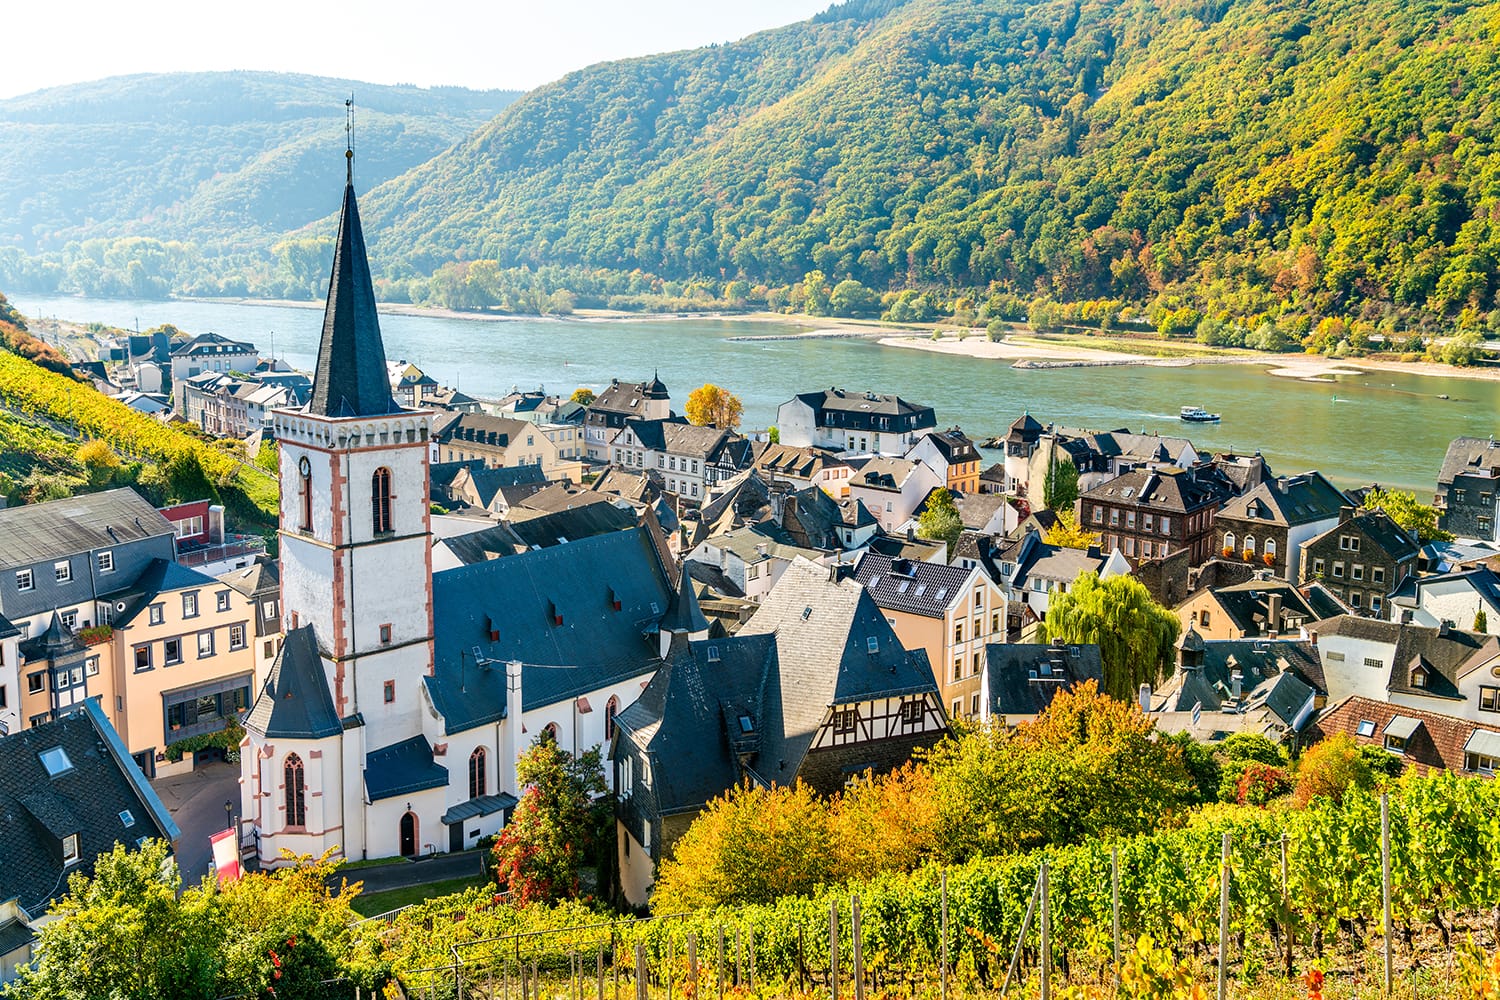 Hony Cross Church in Assmannshausen - the Rhine Valley, Germany